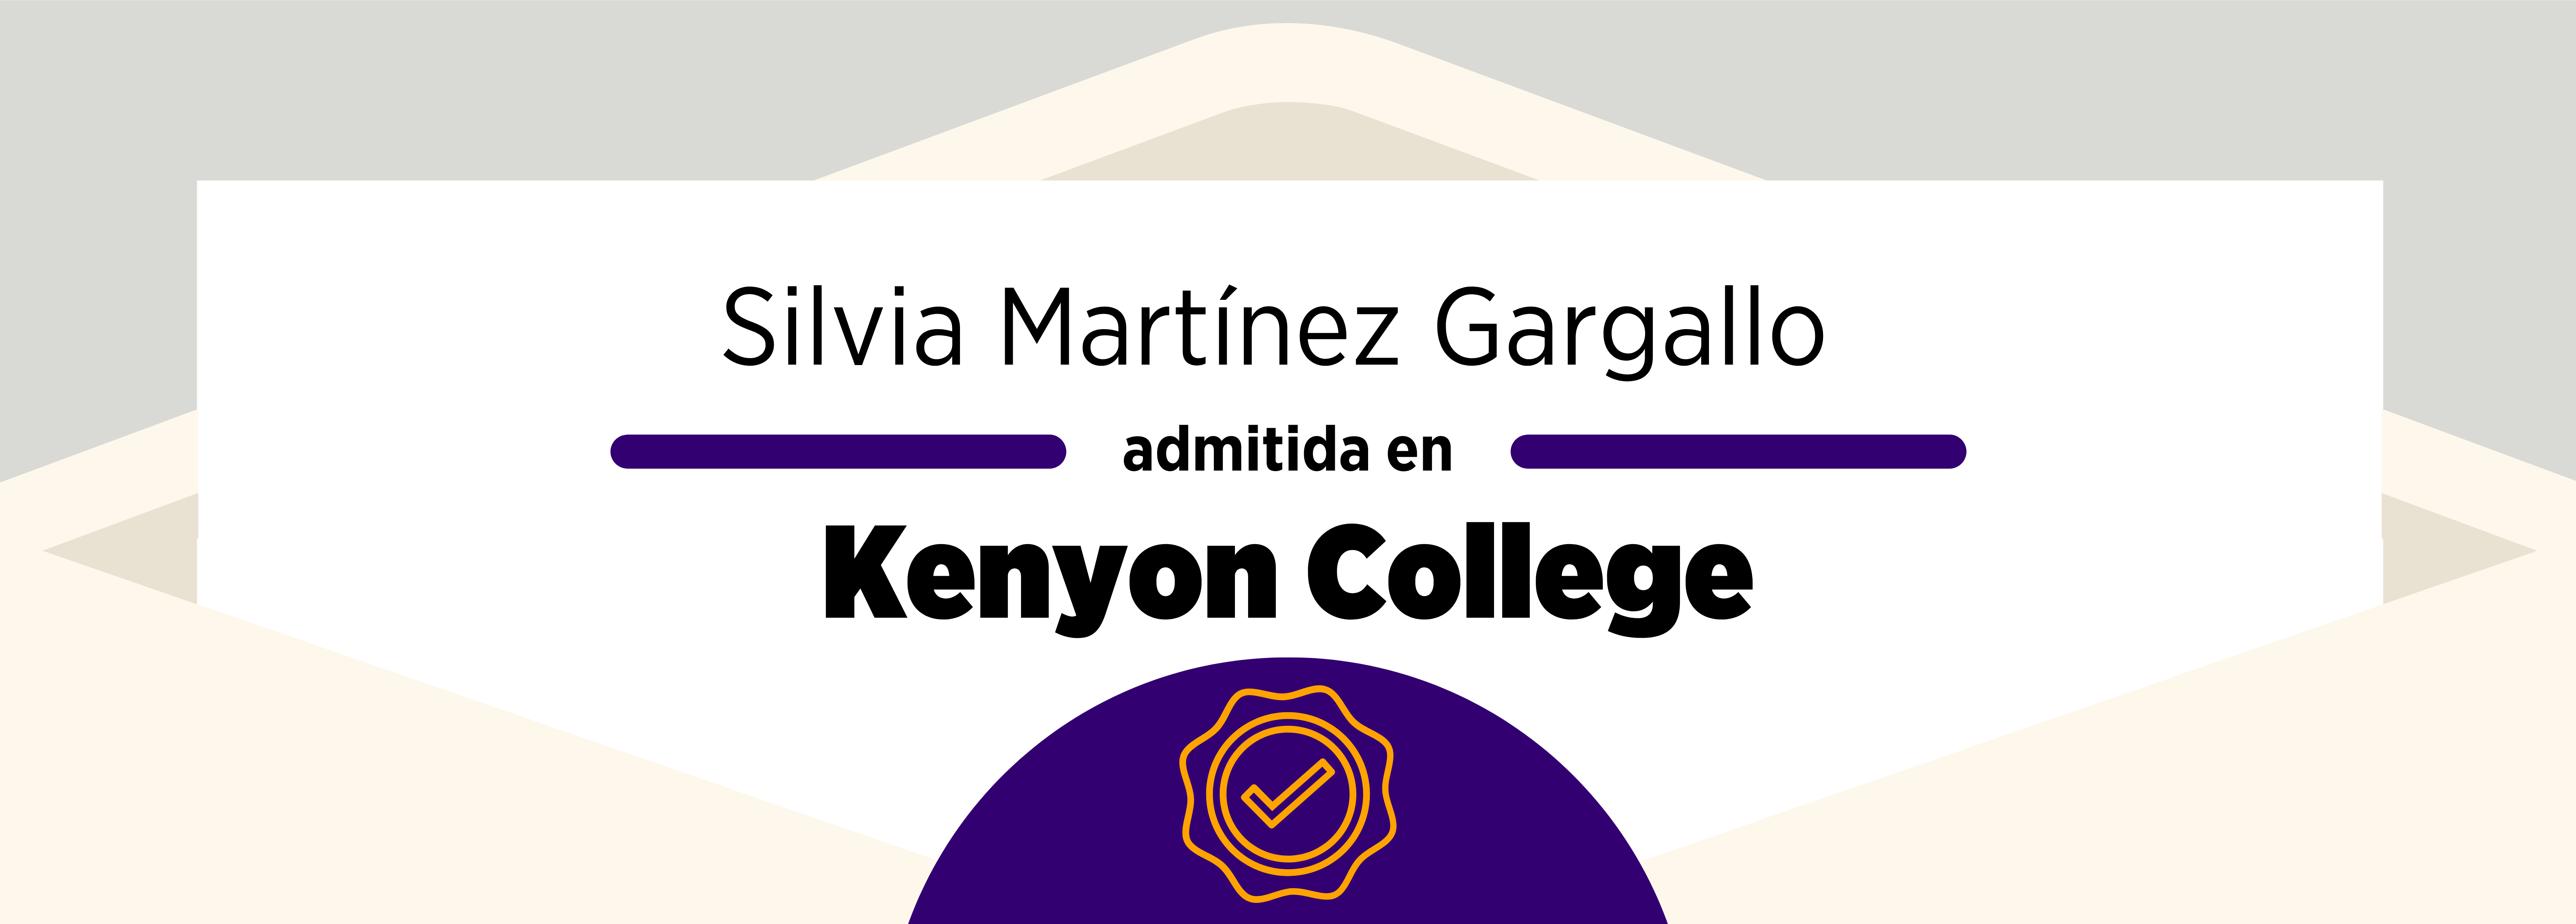 Admissions 2023: Silvia Martínez Gargallo and Kenyon College